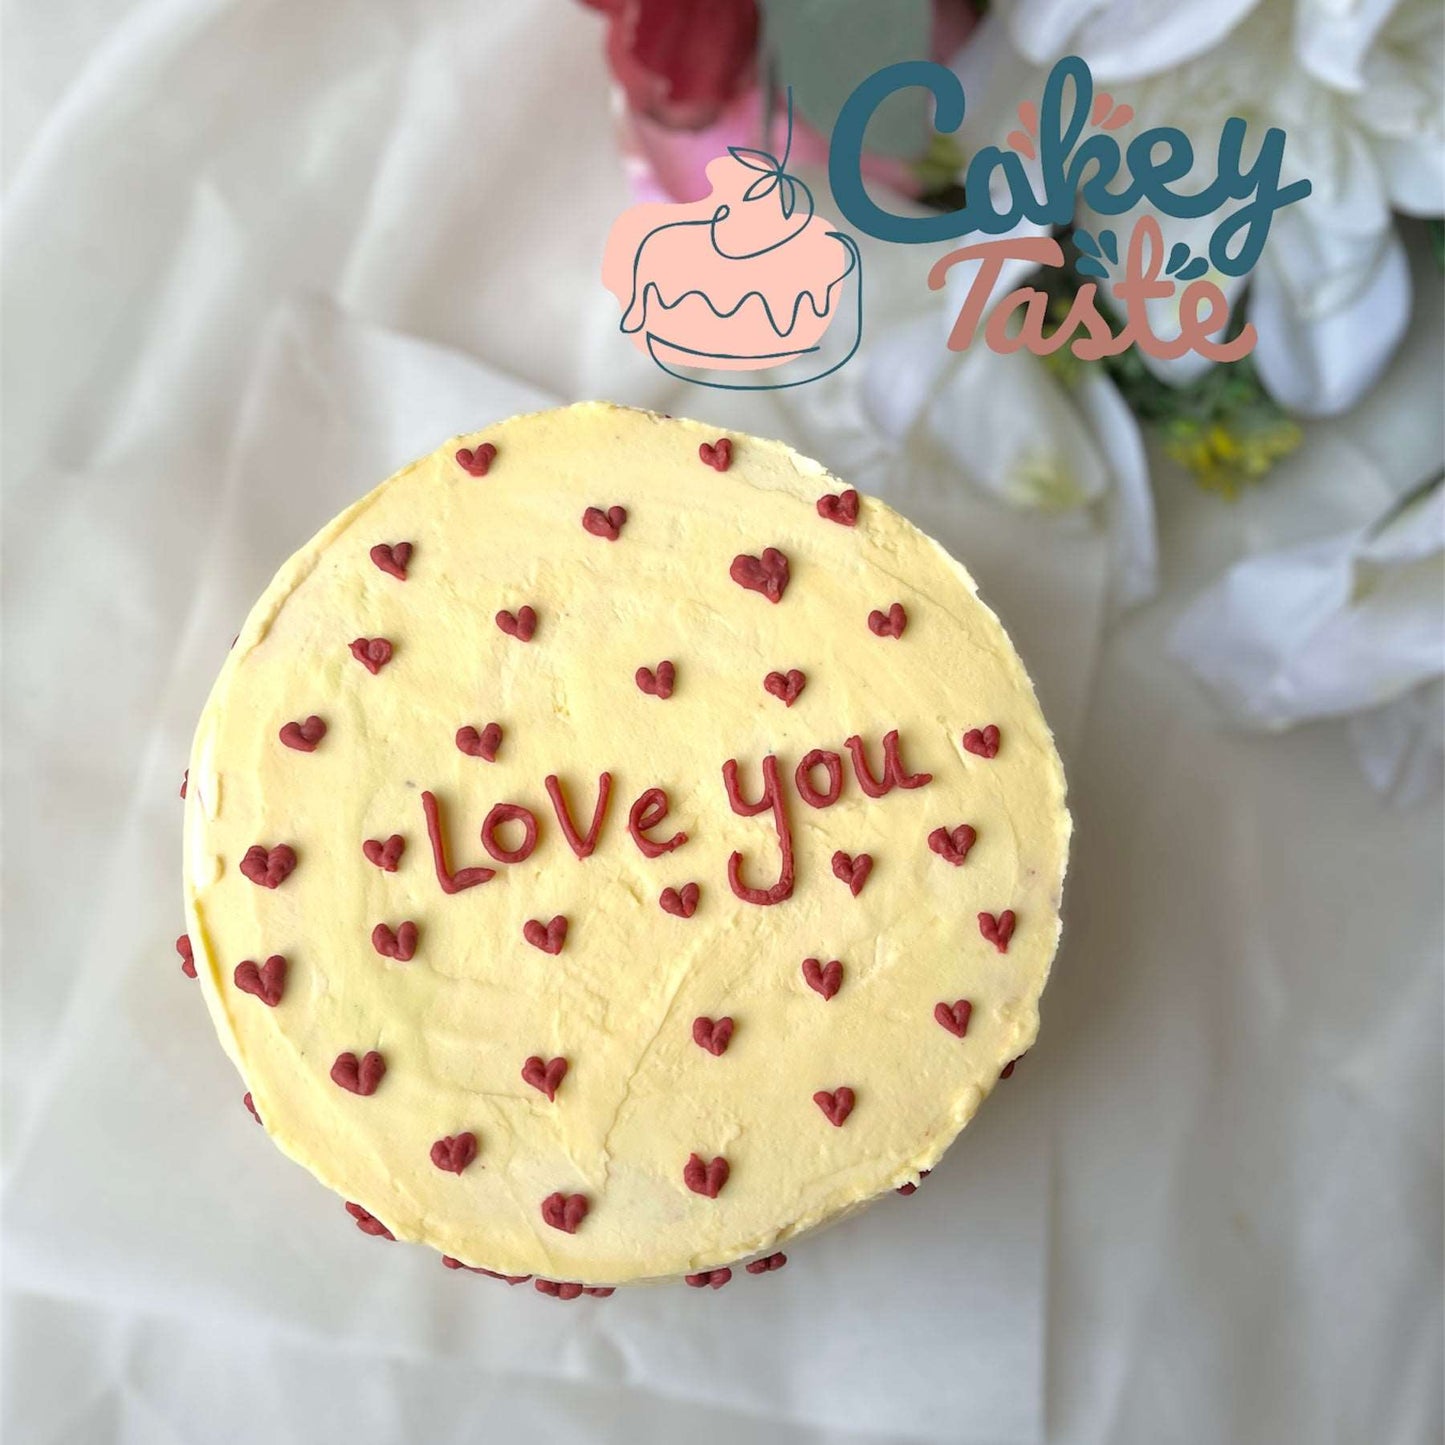 Love You cake